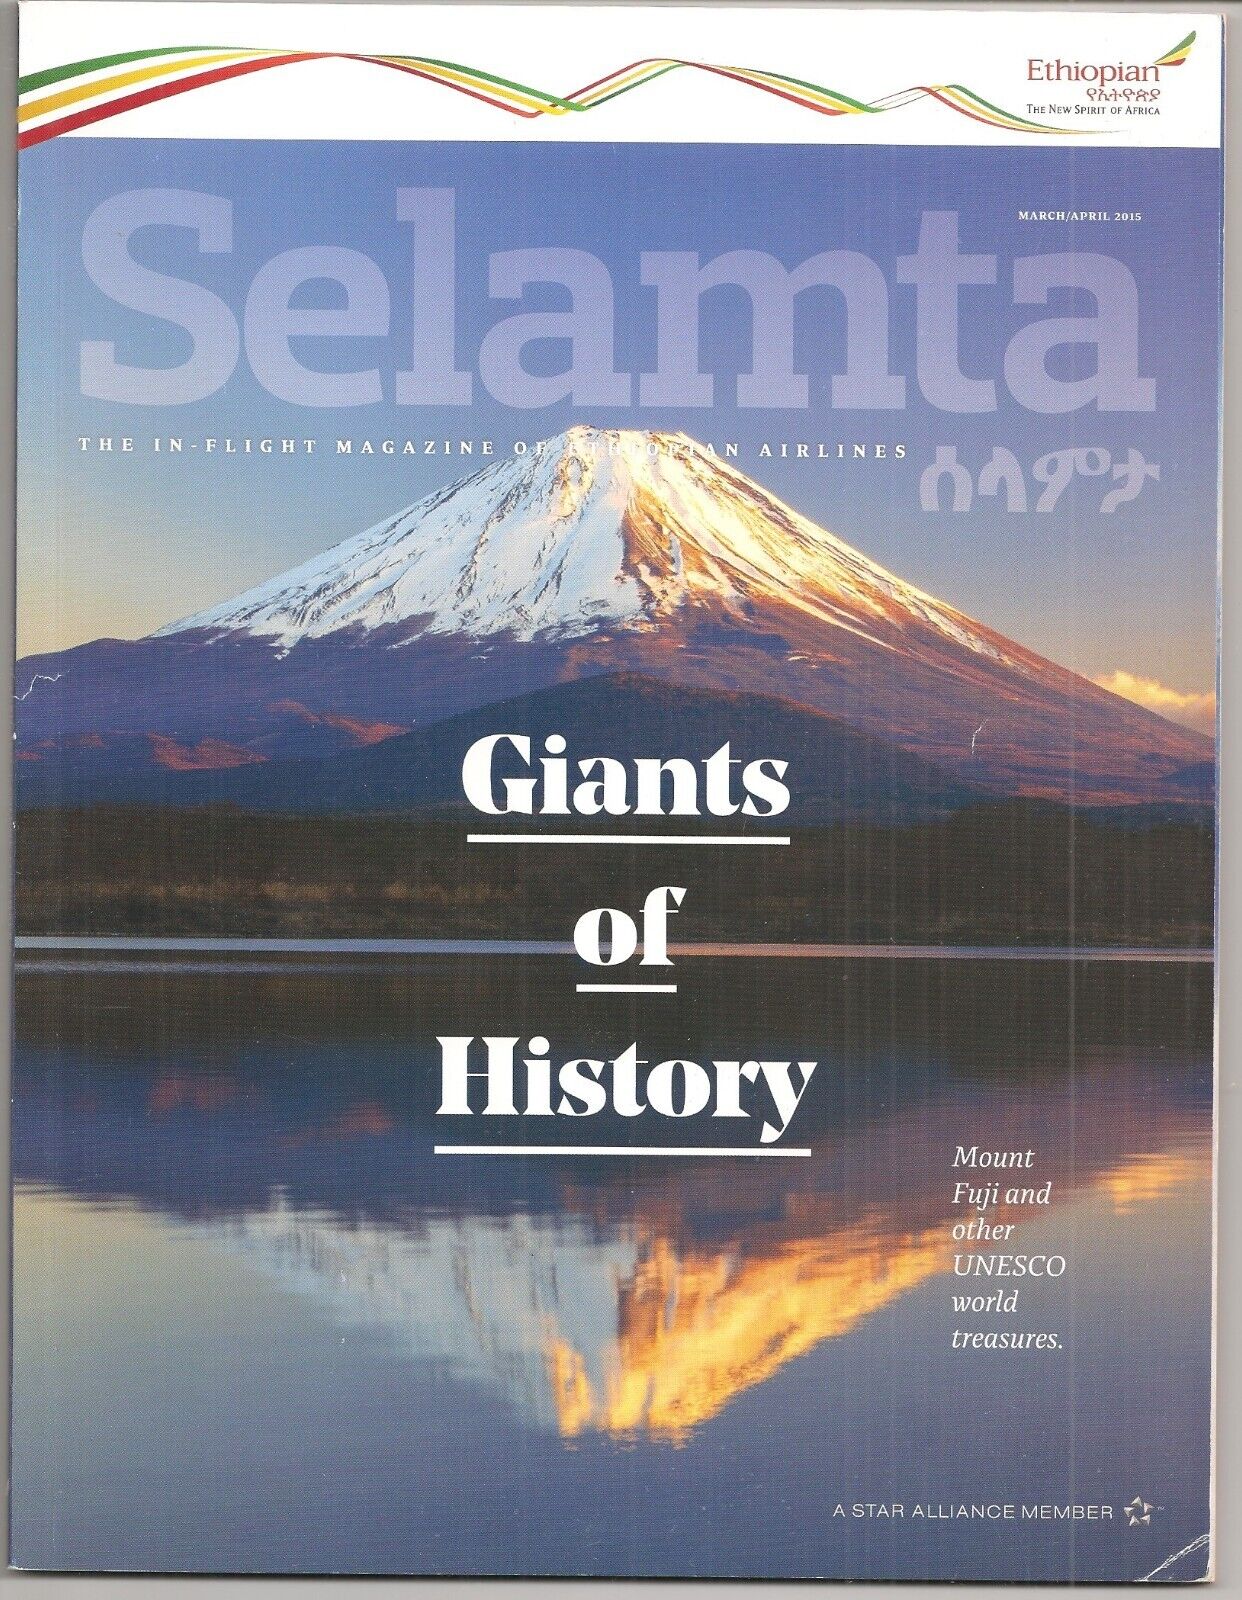 Selamta - Ethiopian Airlines Inflight Magazine March/April 2015